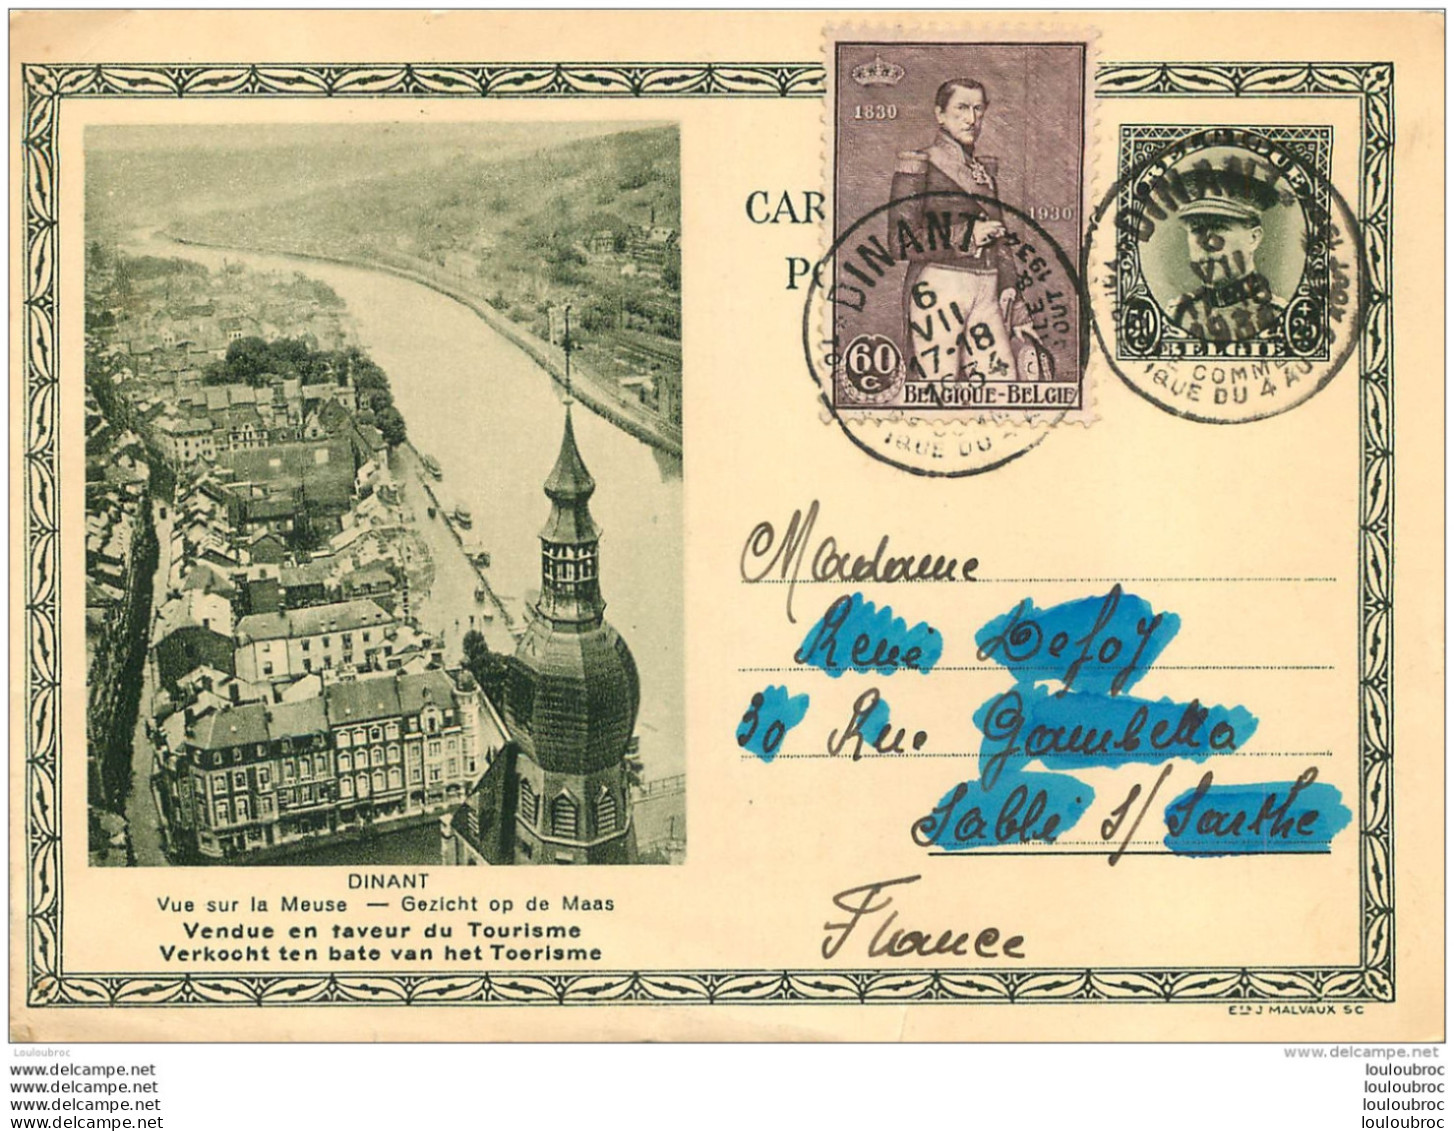 DINANT VUE SUR LA MEUSE OBLITEREE A DINANT EN 1934 - Illustrated Postcards (1971-2014) [BK]